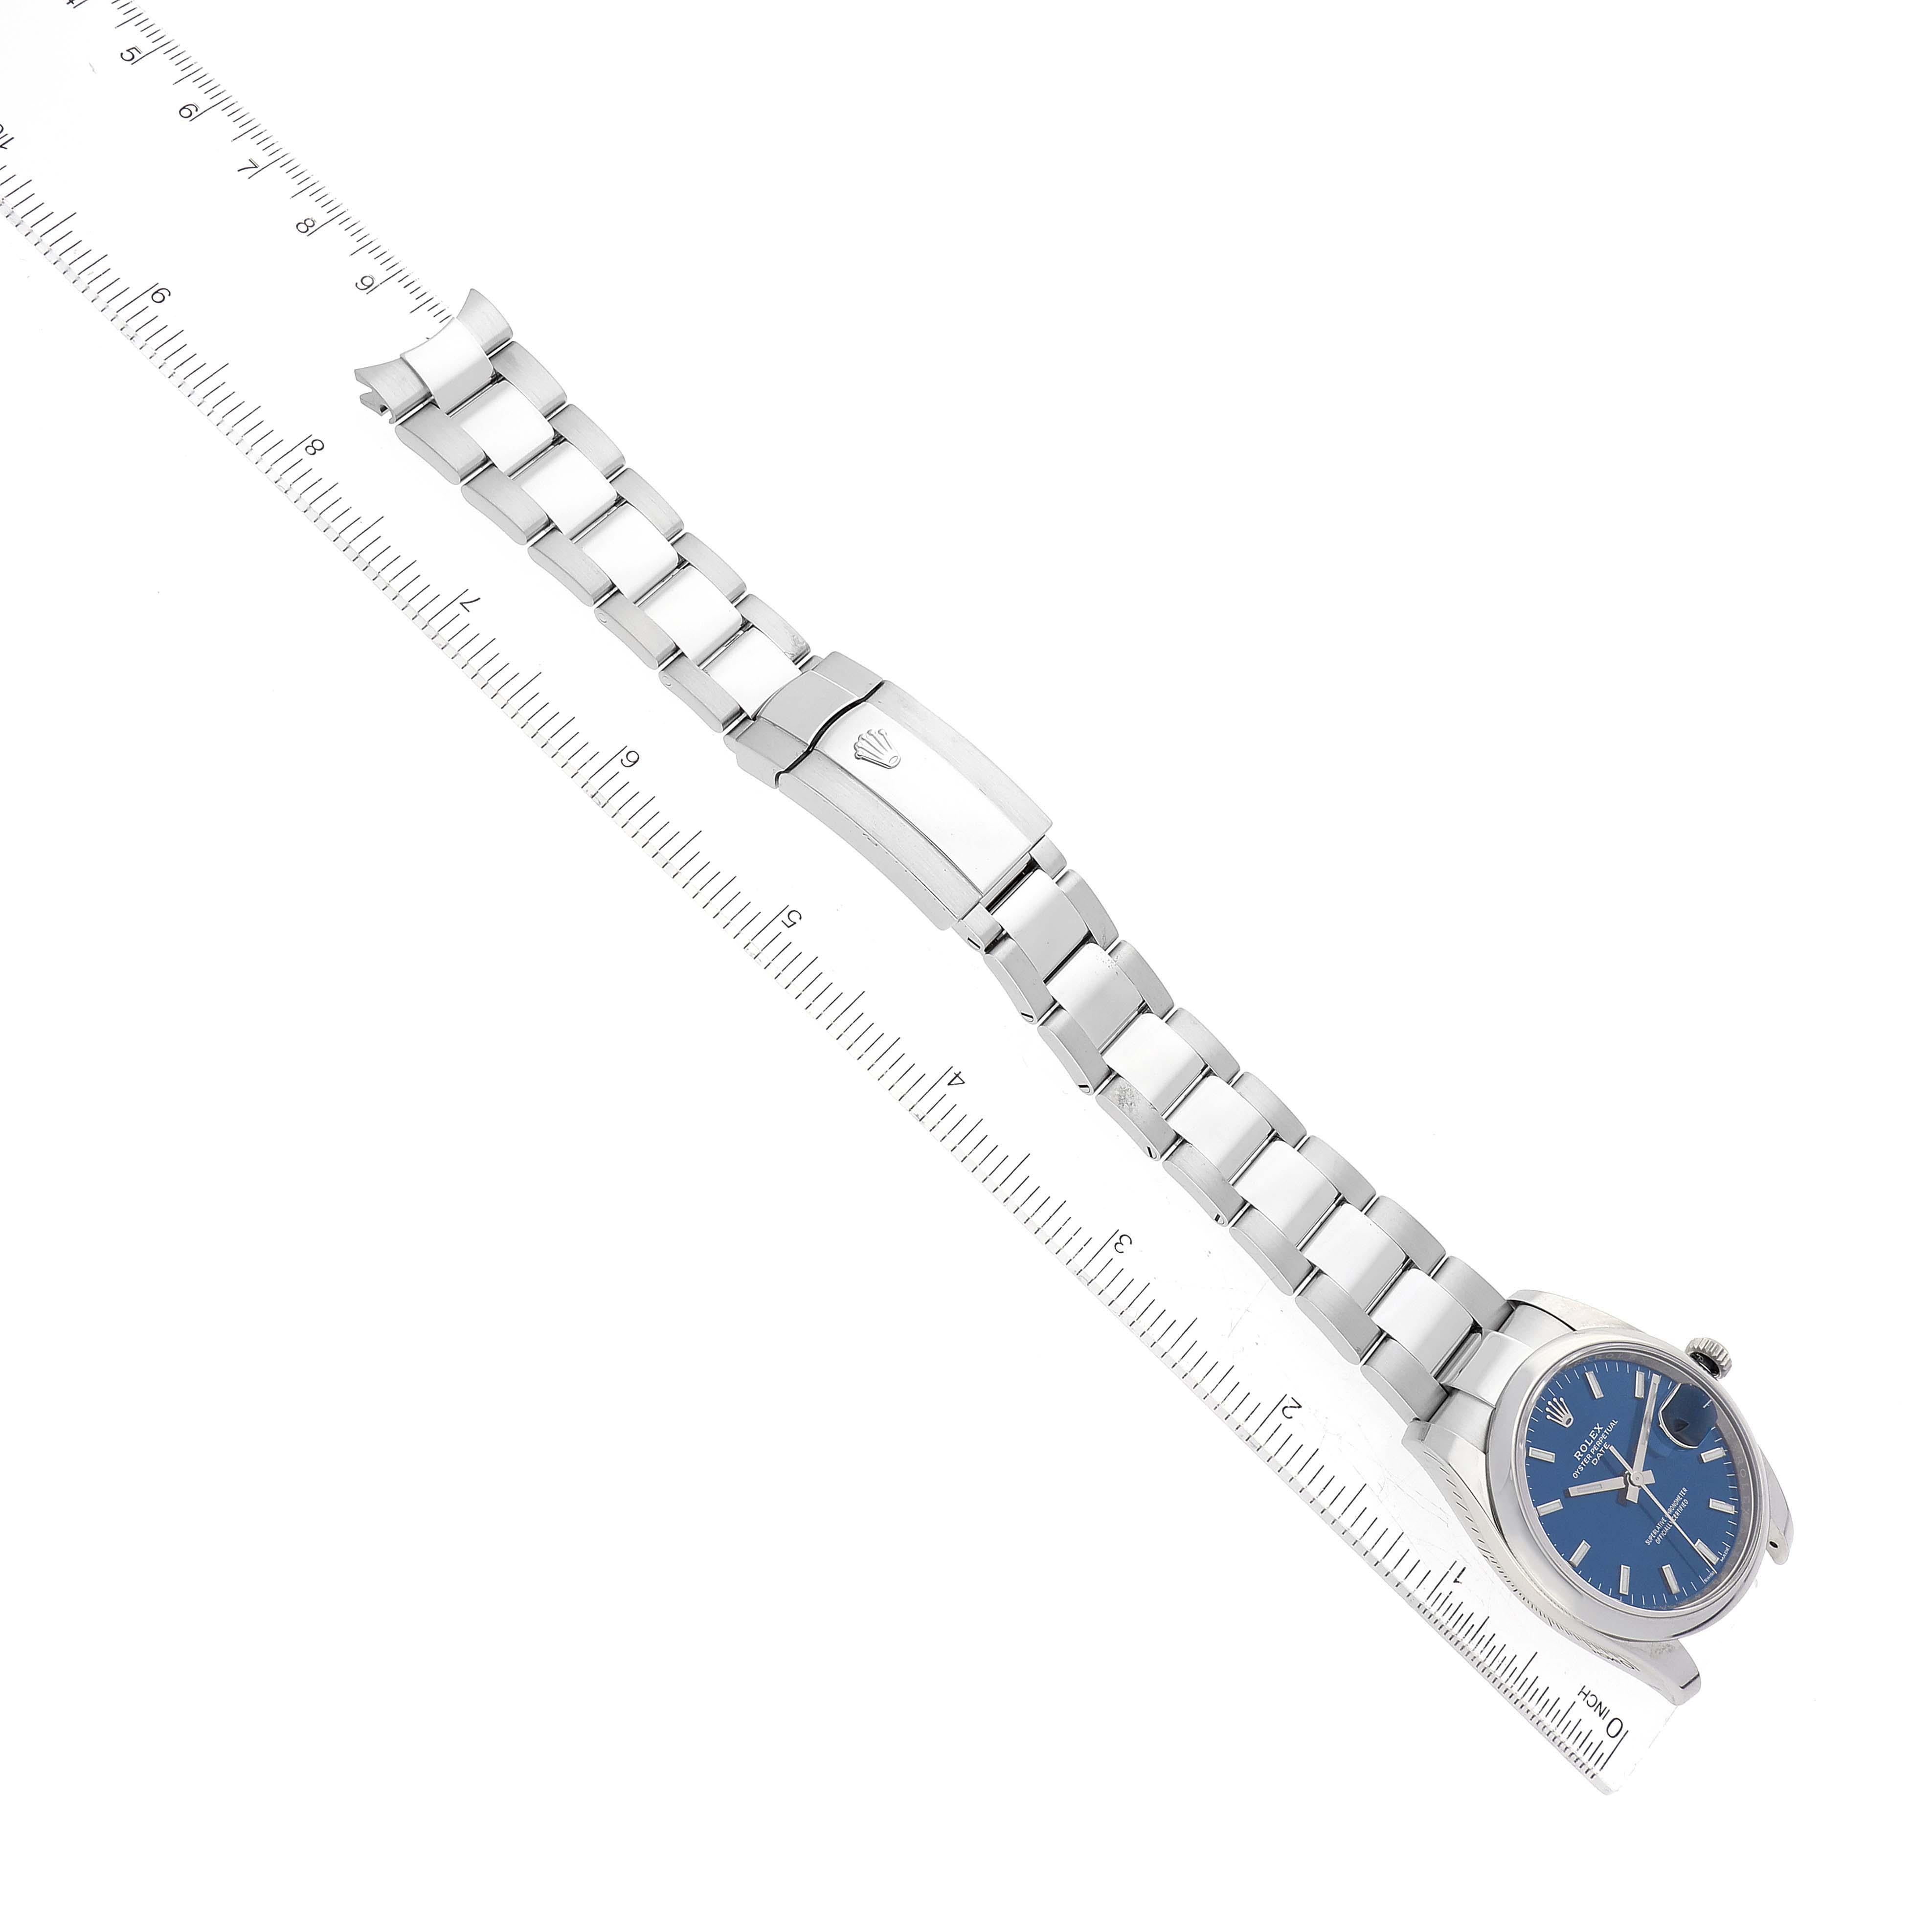 Rolex Date Acero Inoxidable Esfera Azul Reloj Caballero 115200 Caja Tarjeta en venta 8